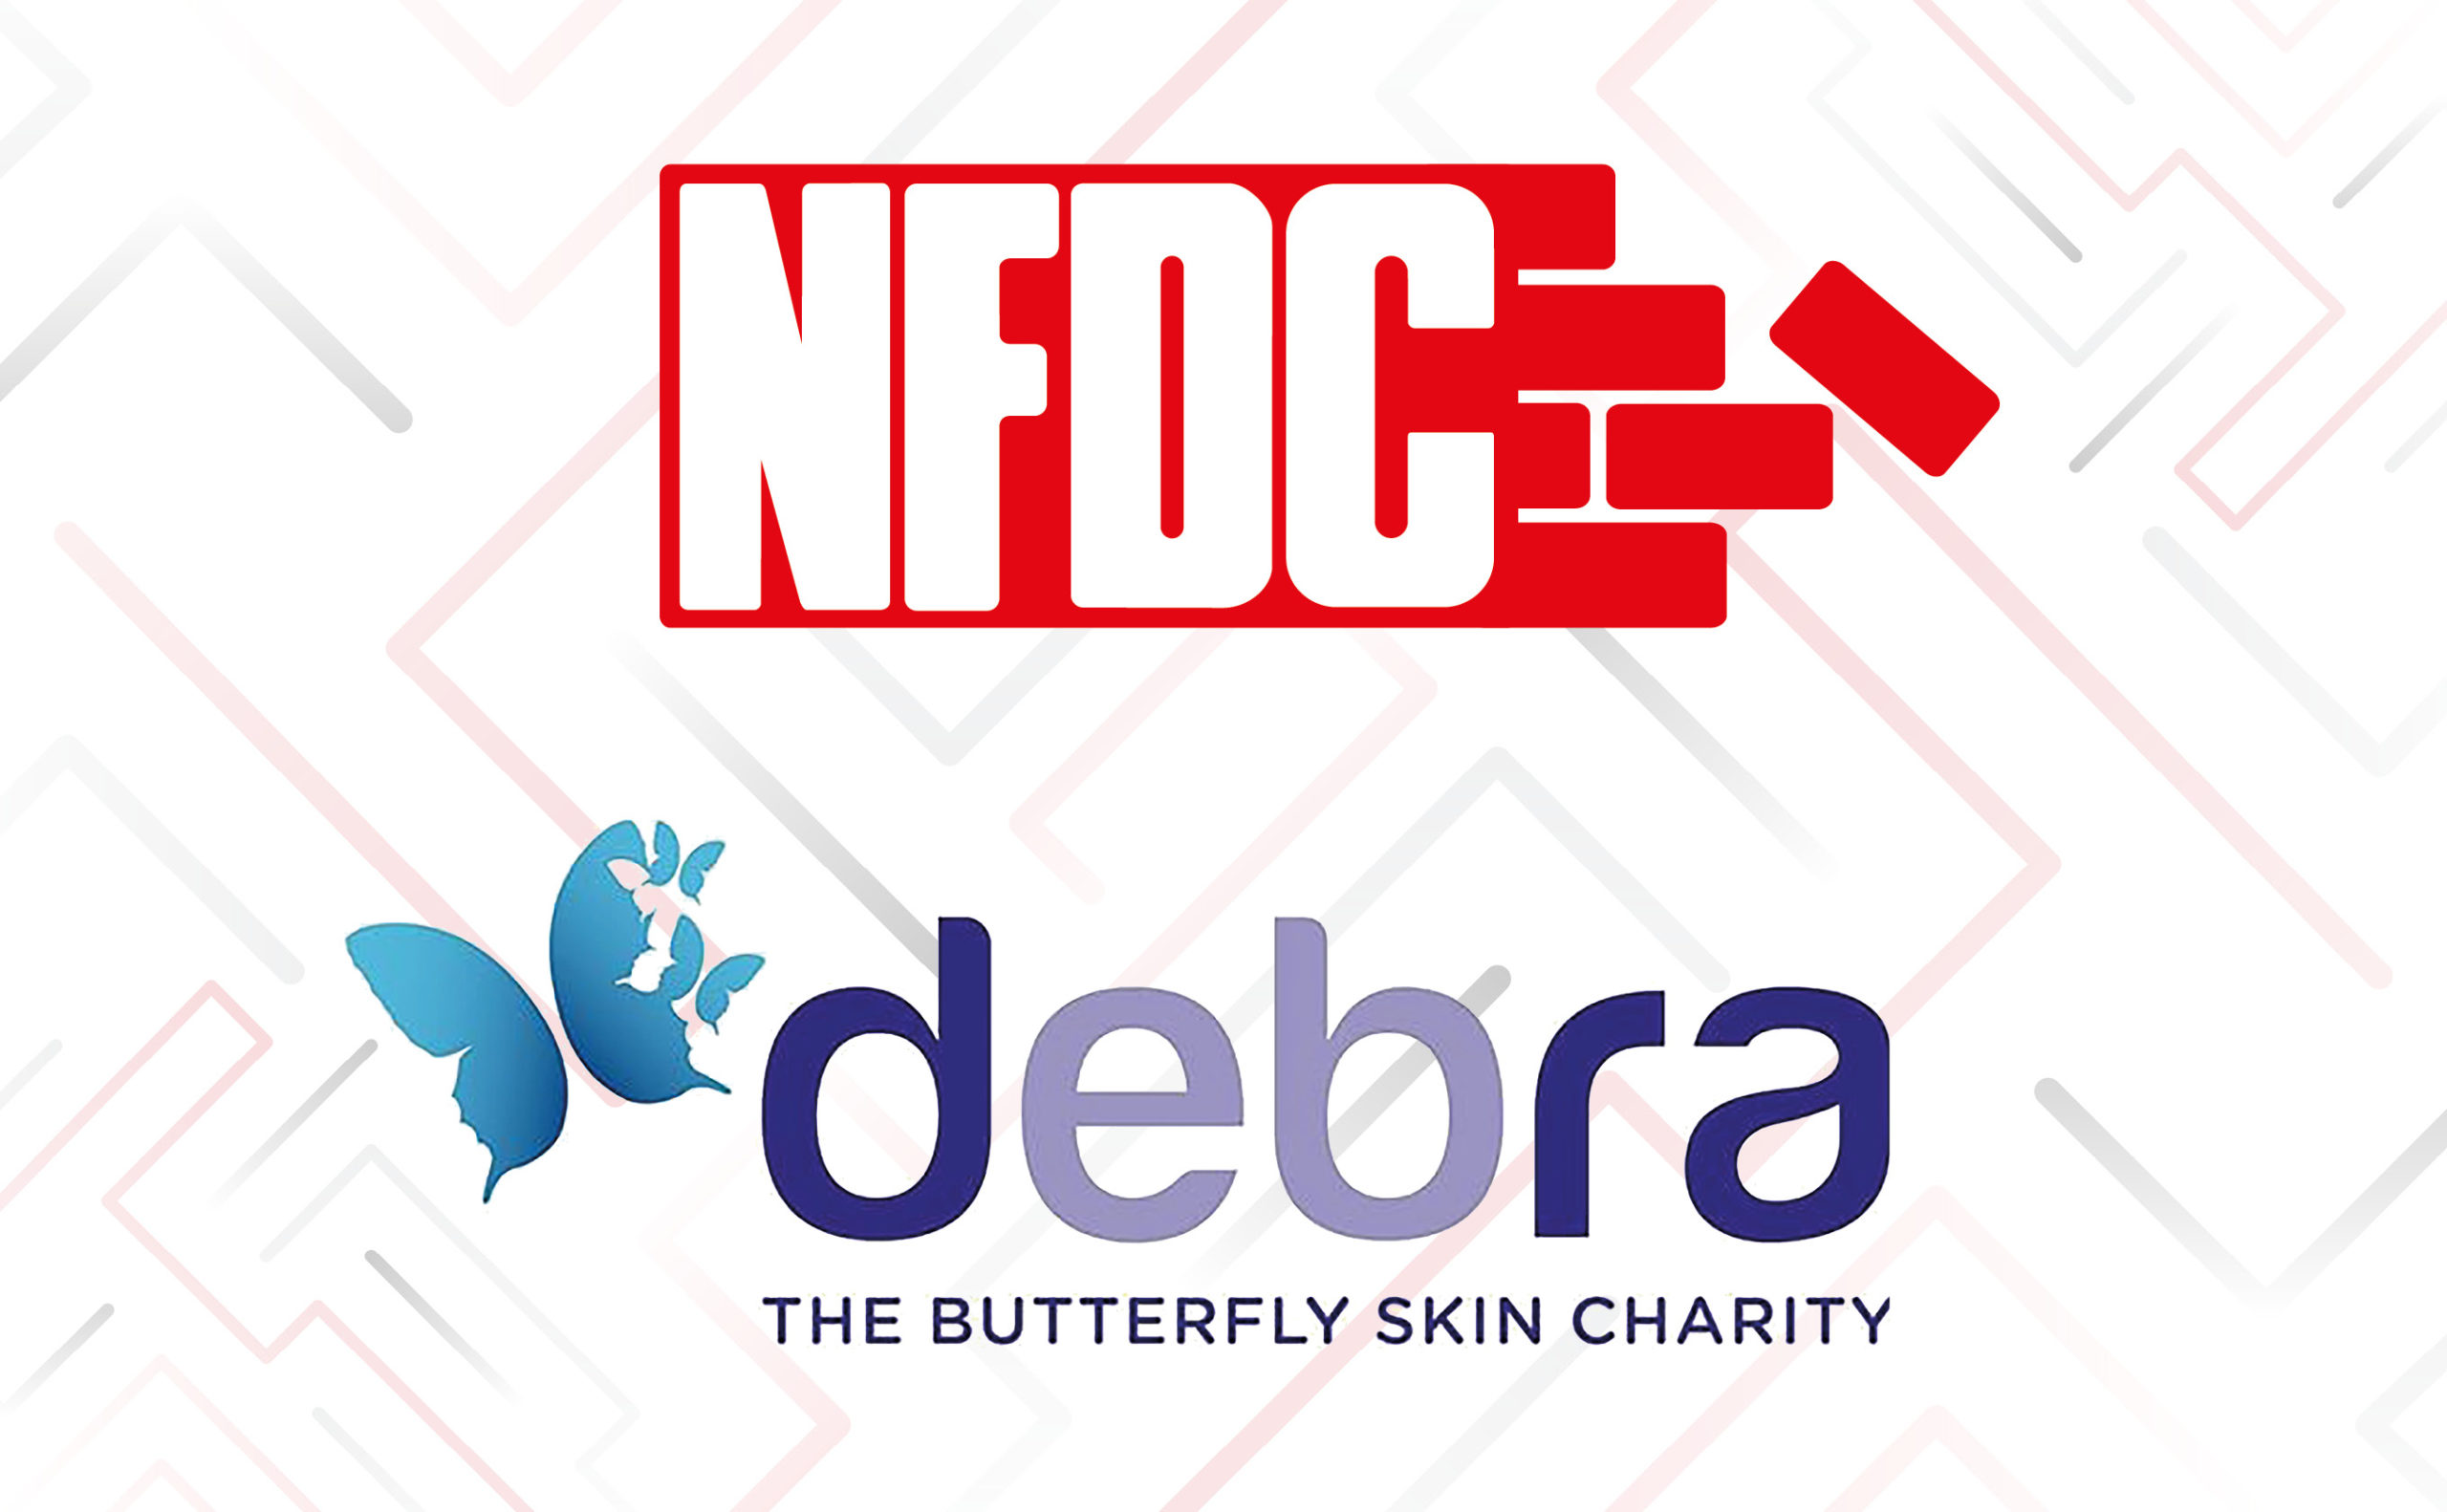 NFDC pledges £10,000 support to DEBRA charity